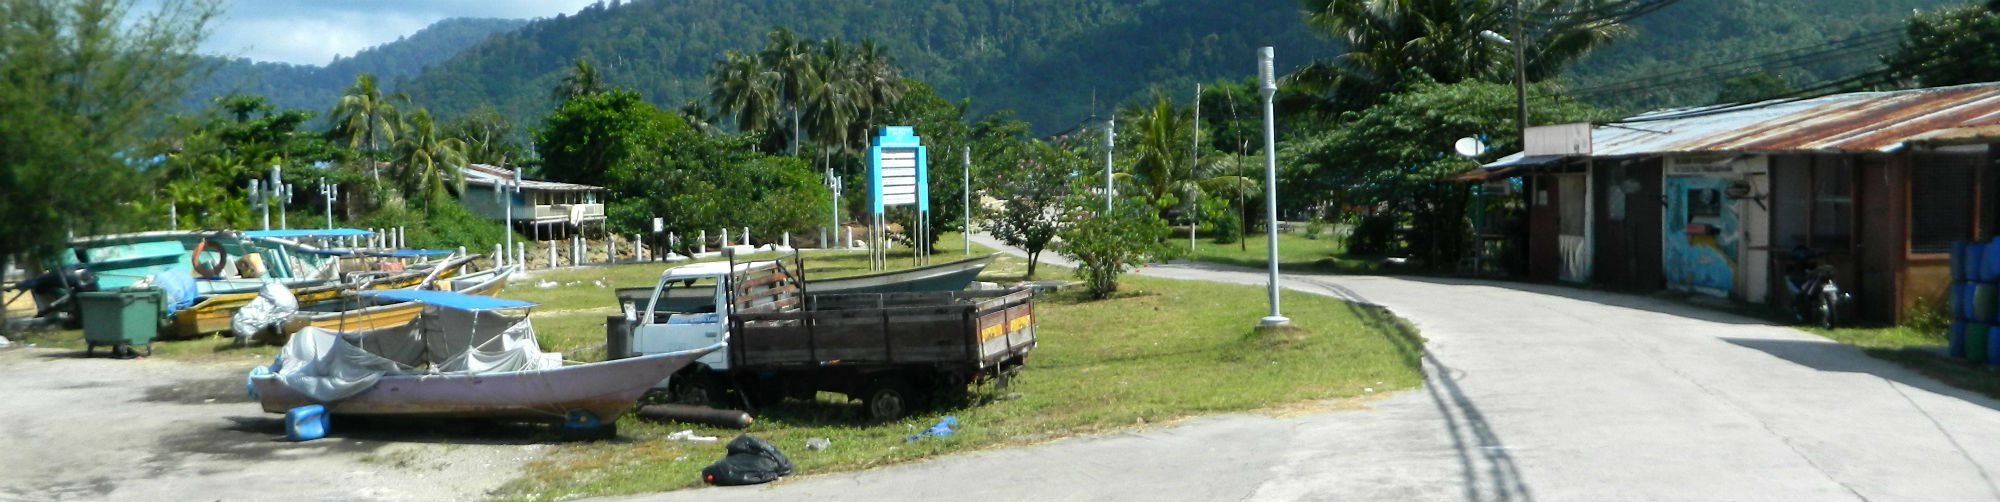 Tekek, Tioman Island, Pahang State, Malaysia